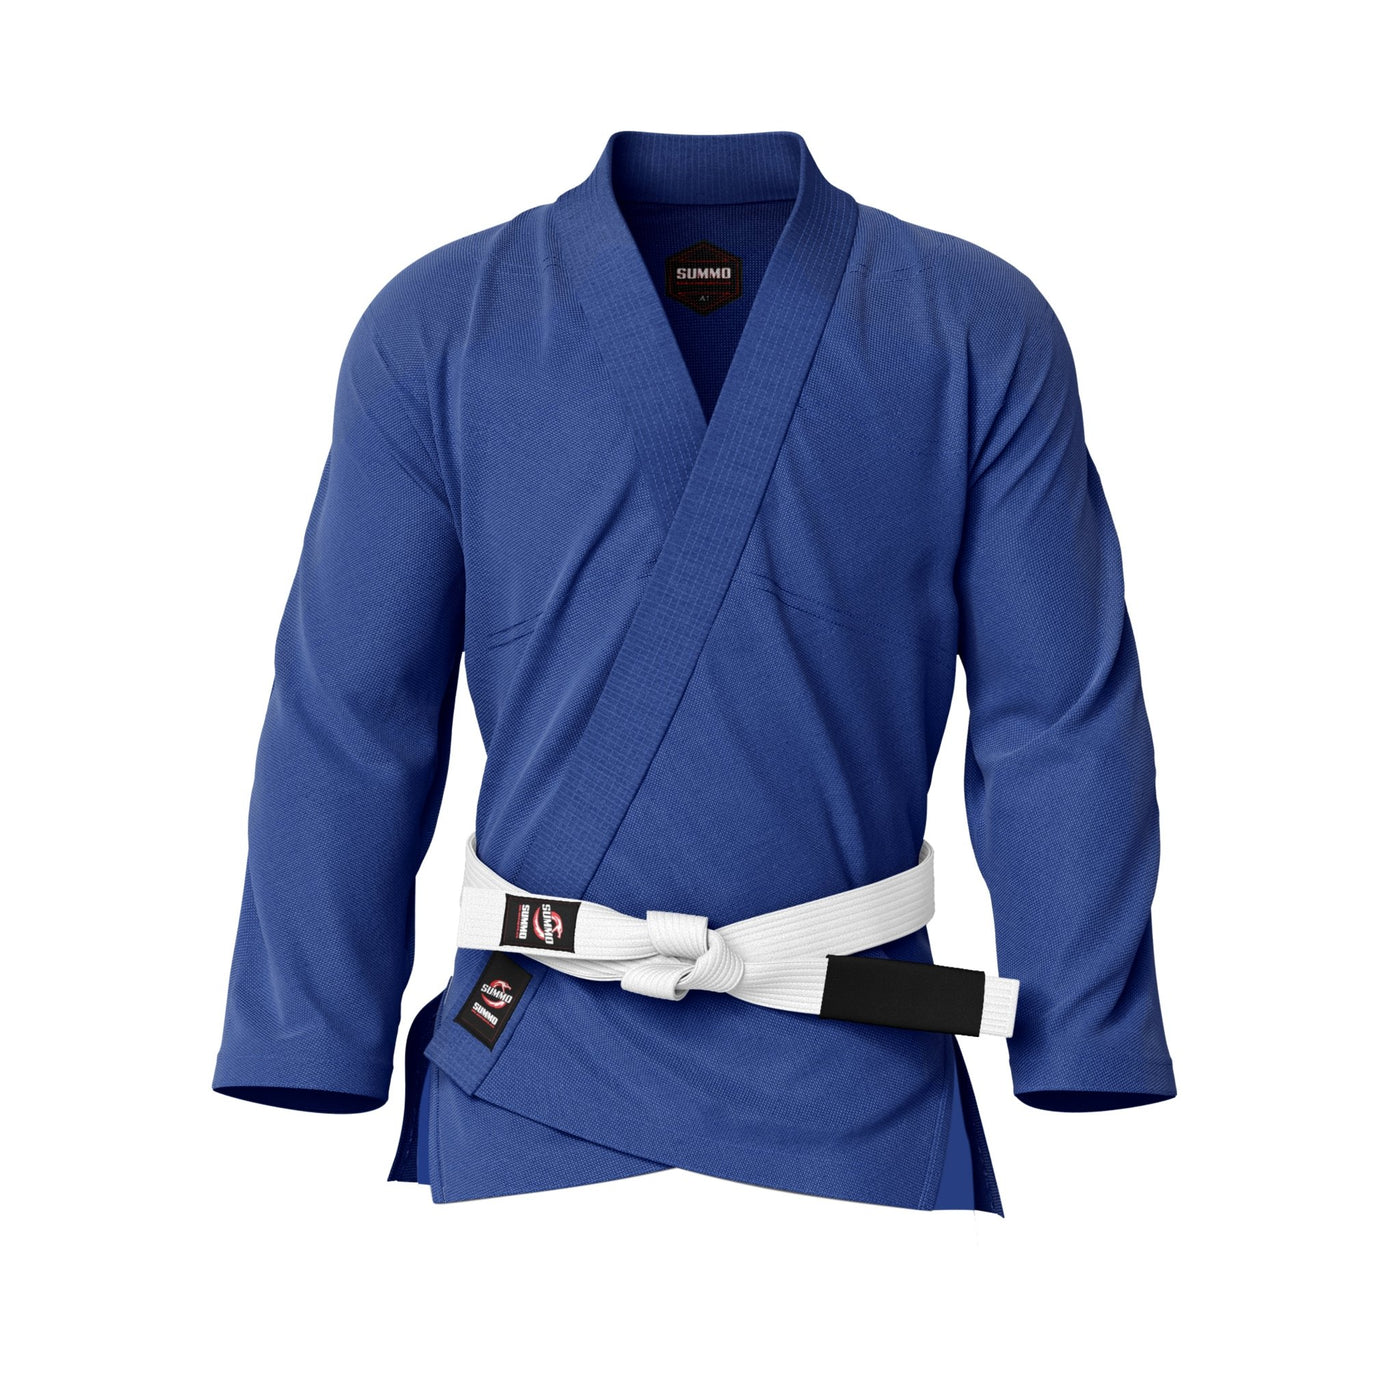 Summo Basic Blue Brazilian Jiu Jitsu Gi Jacket - Summo Sports